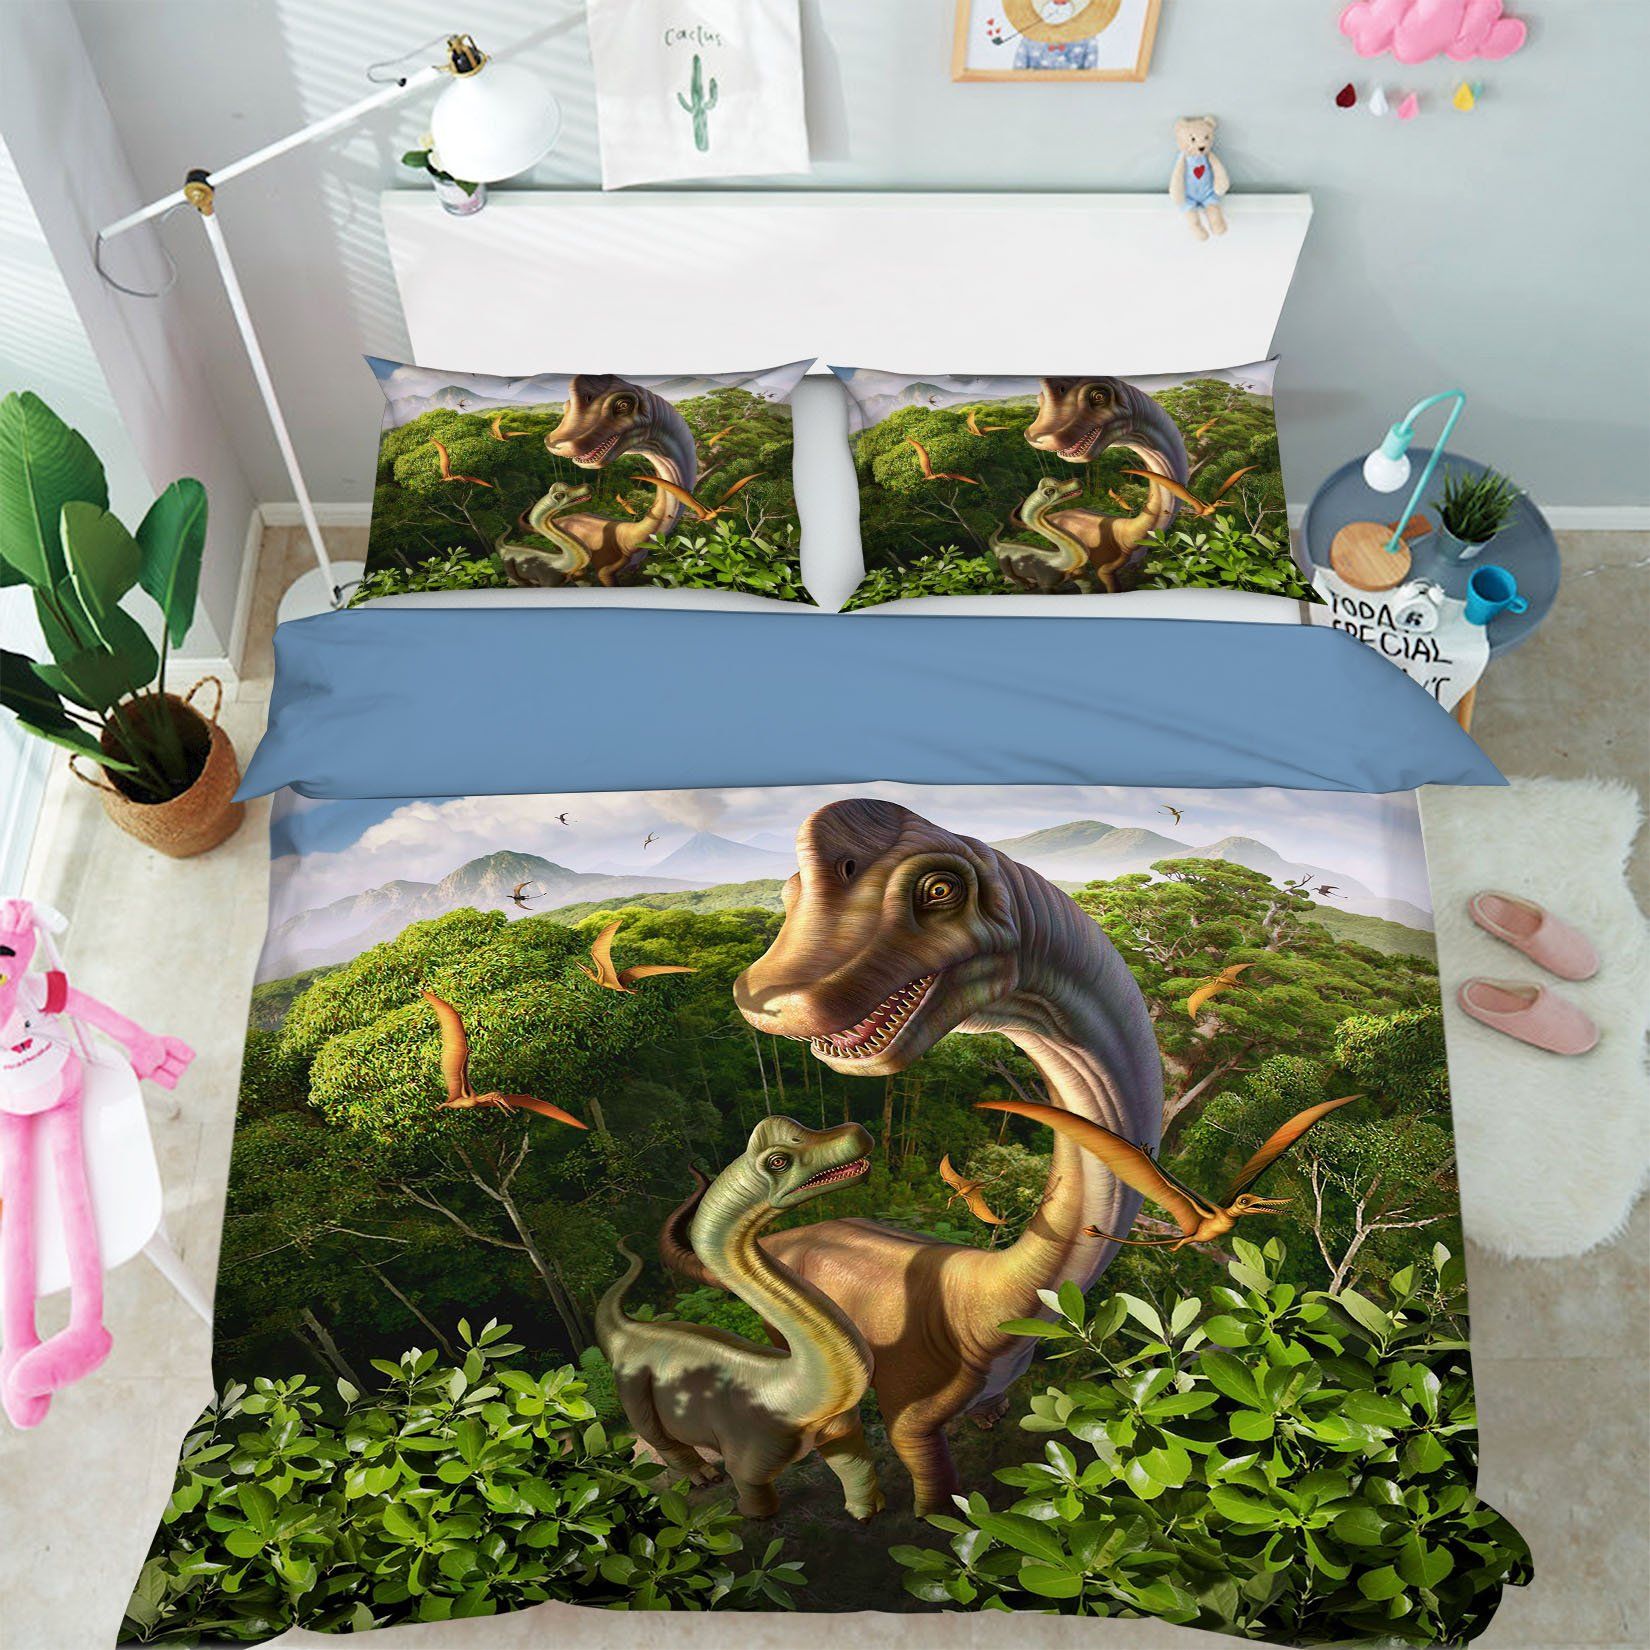 3D Brachiosaurus 2102 Jerry LoFaro bedding Bed Pillowcases Quilt Quiet Covers AJ Creativity Home 